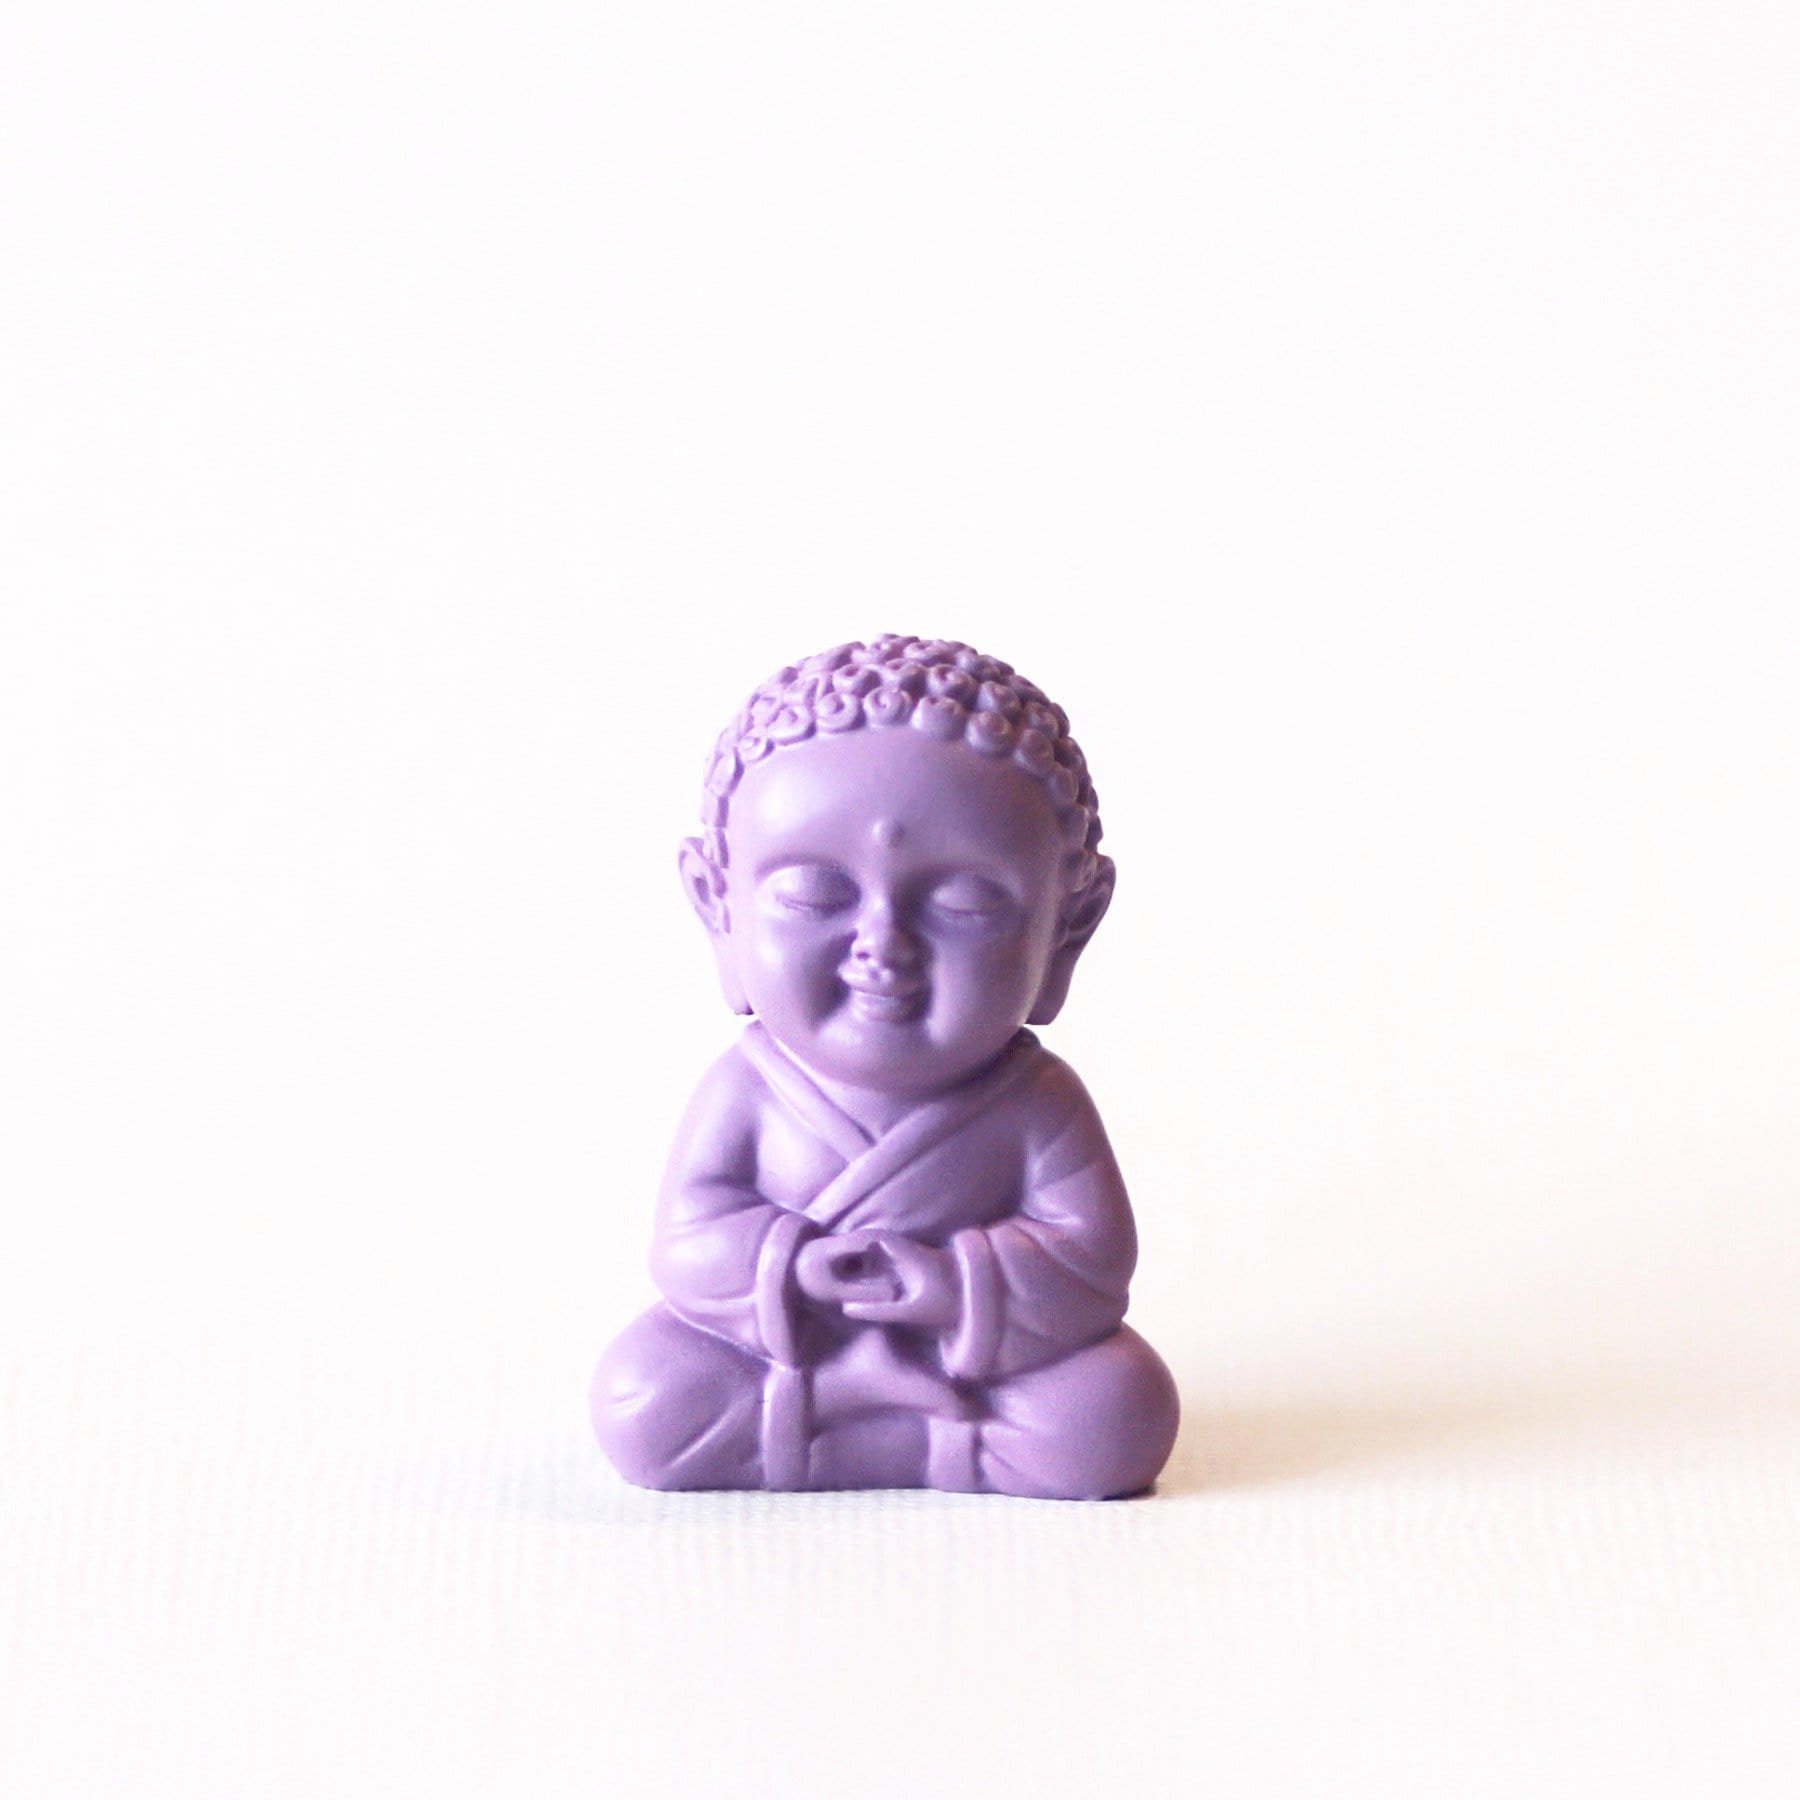 Lavender peace baby buddha statue